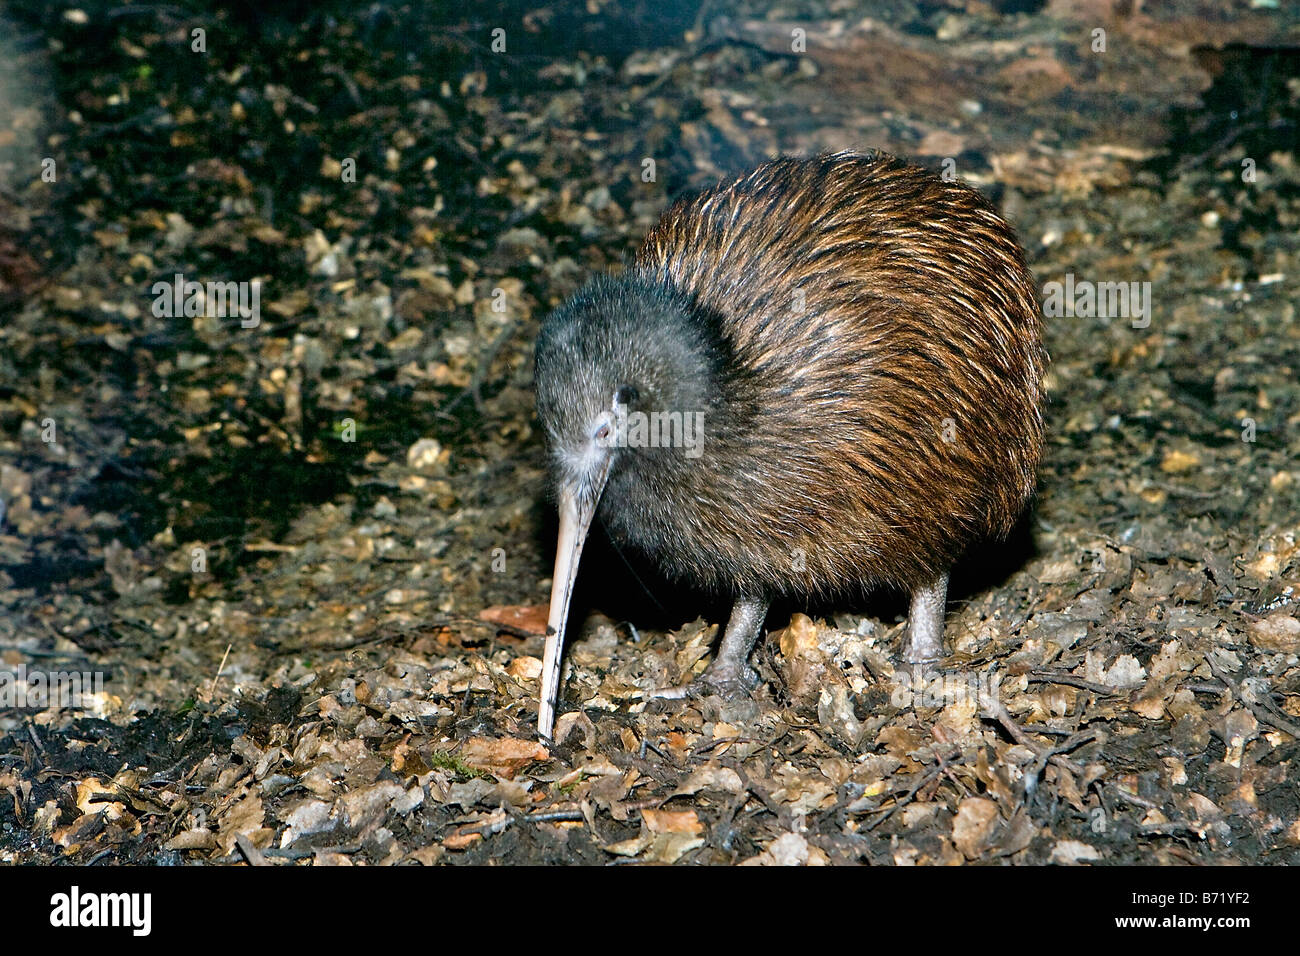 Kiwi animal hi-res stock photography and images - Alamy